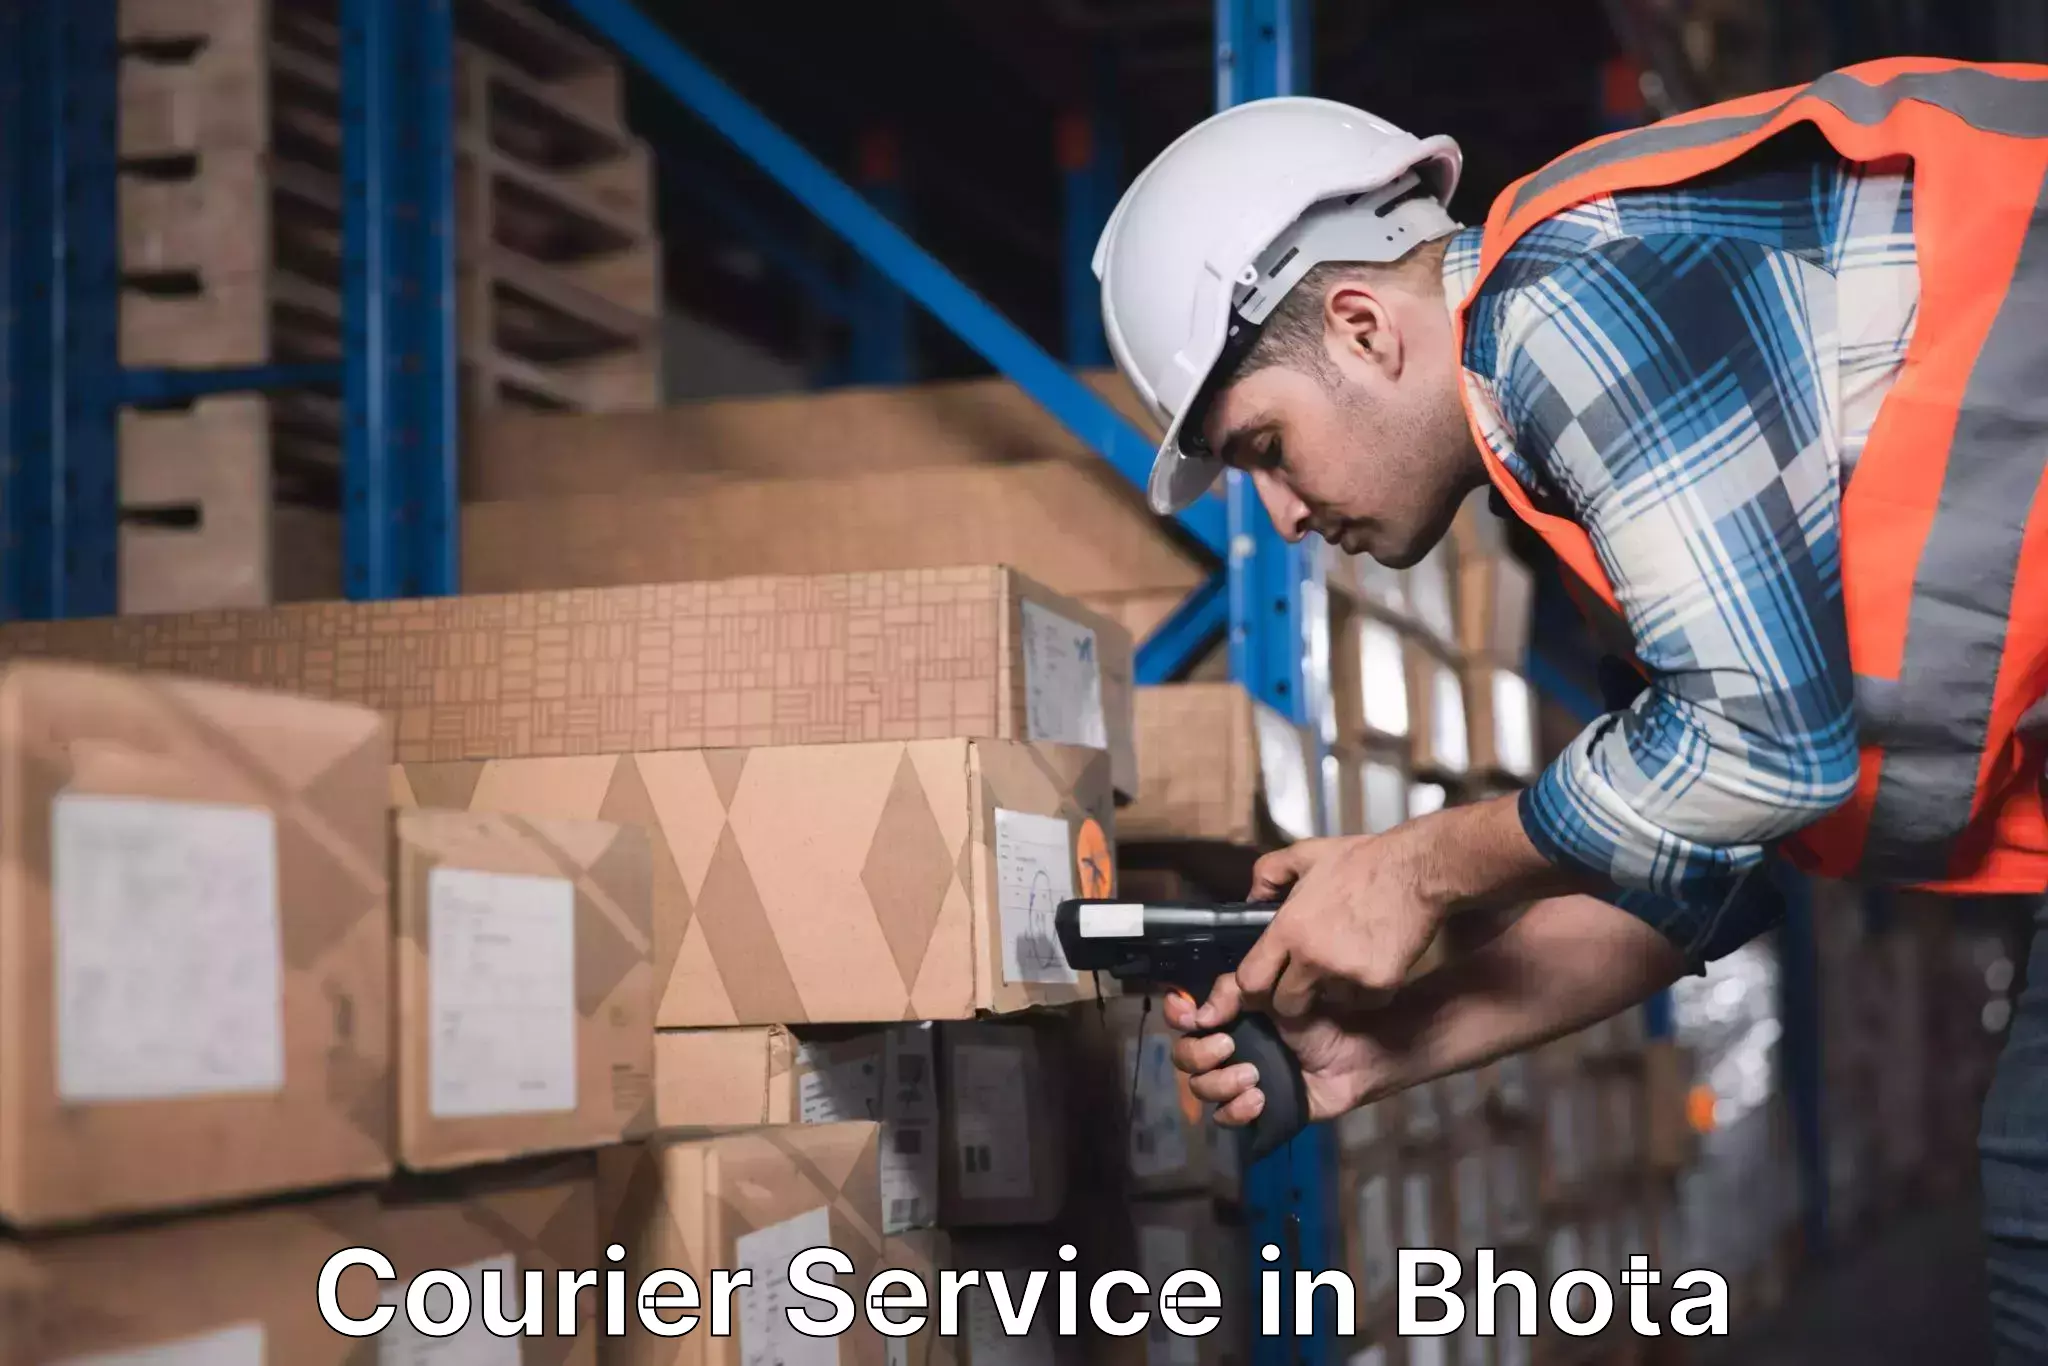 Efficient shipping platforms in Bhota